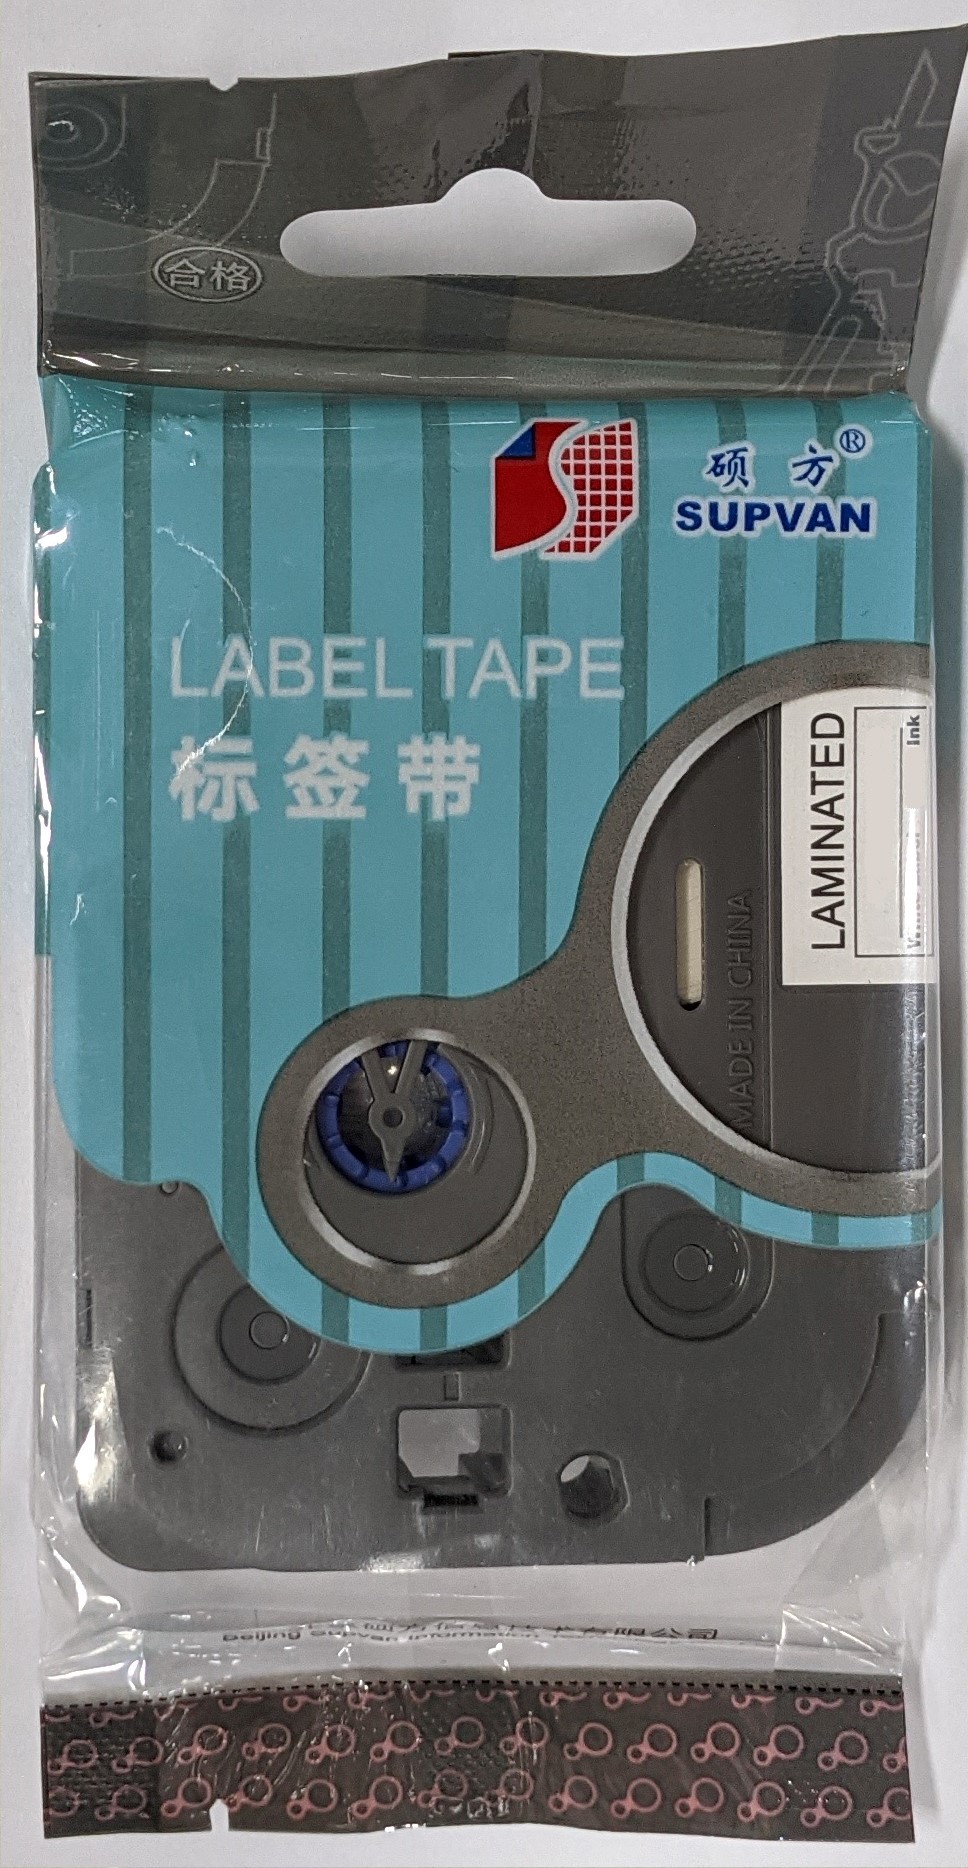 Samolepicí páska Supvan L-435E, 12mm x 8m, bílý tisk / červený podklad, laminovaná